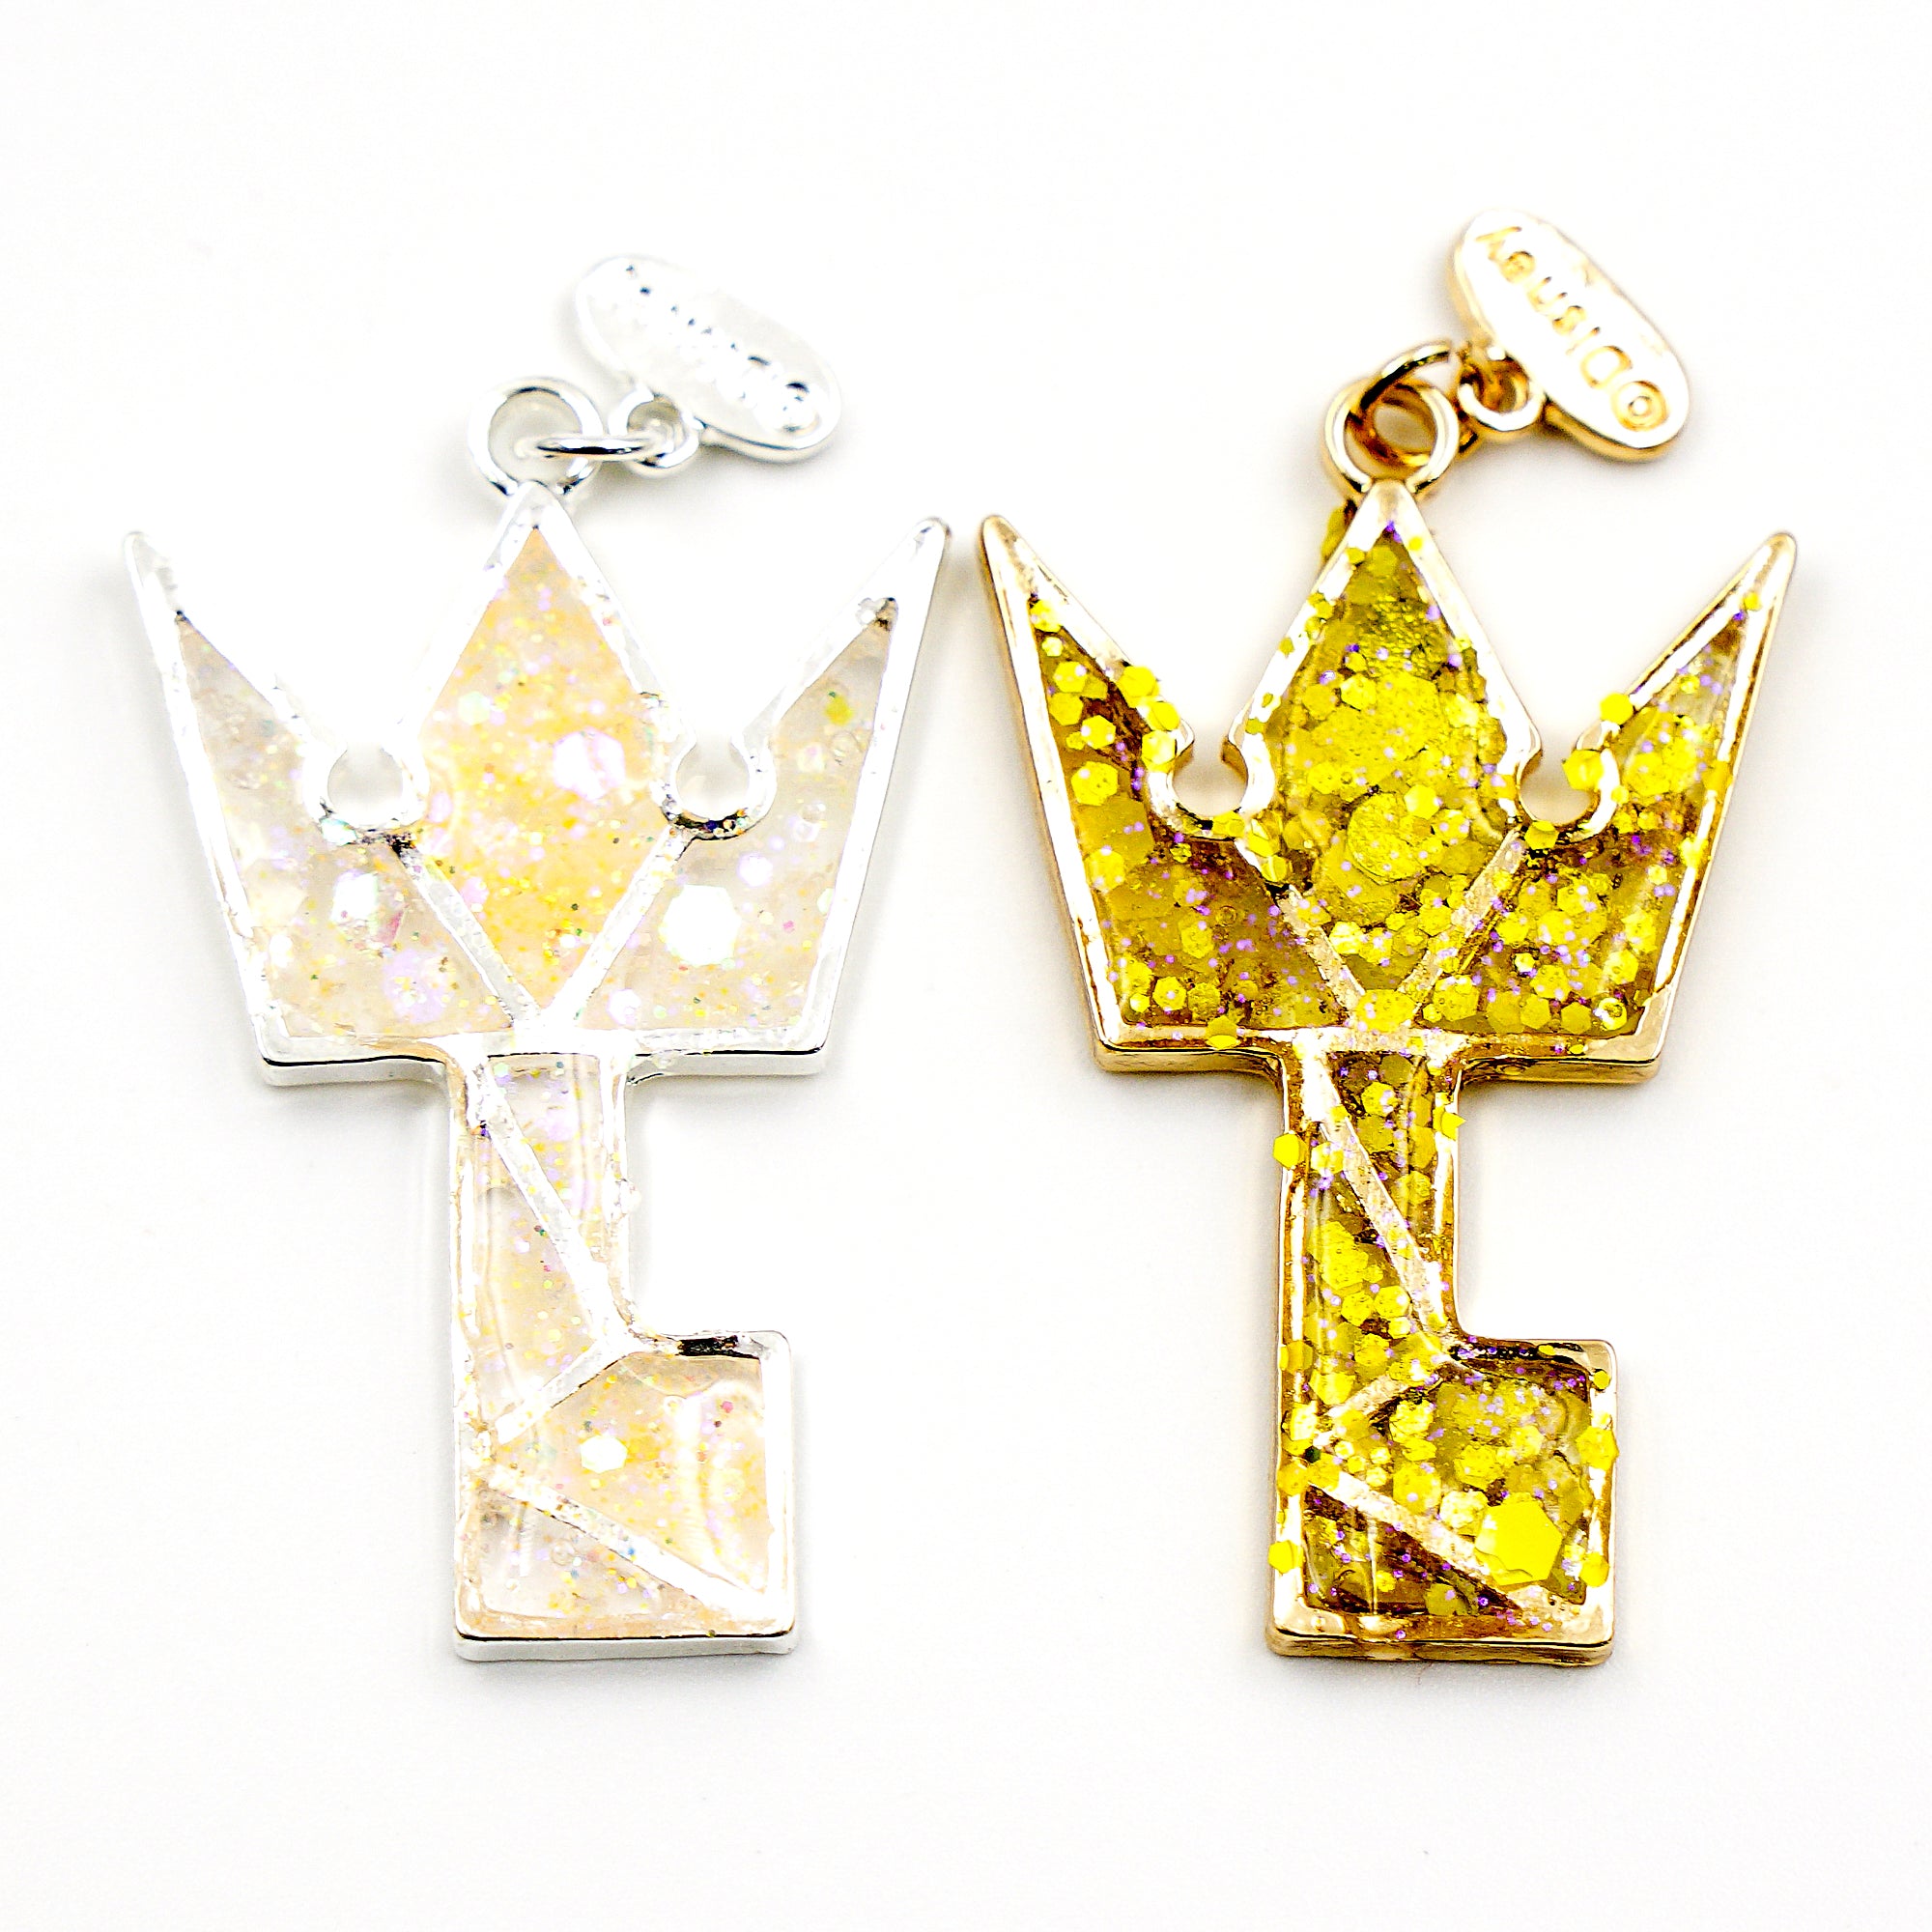 Disney Kingdom Hearts Gold Open Bezel Charms (12 pieces)